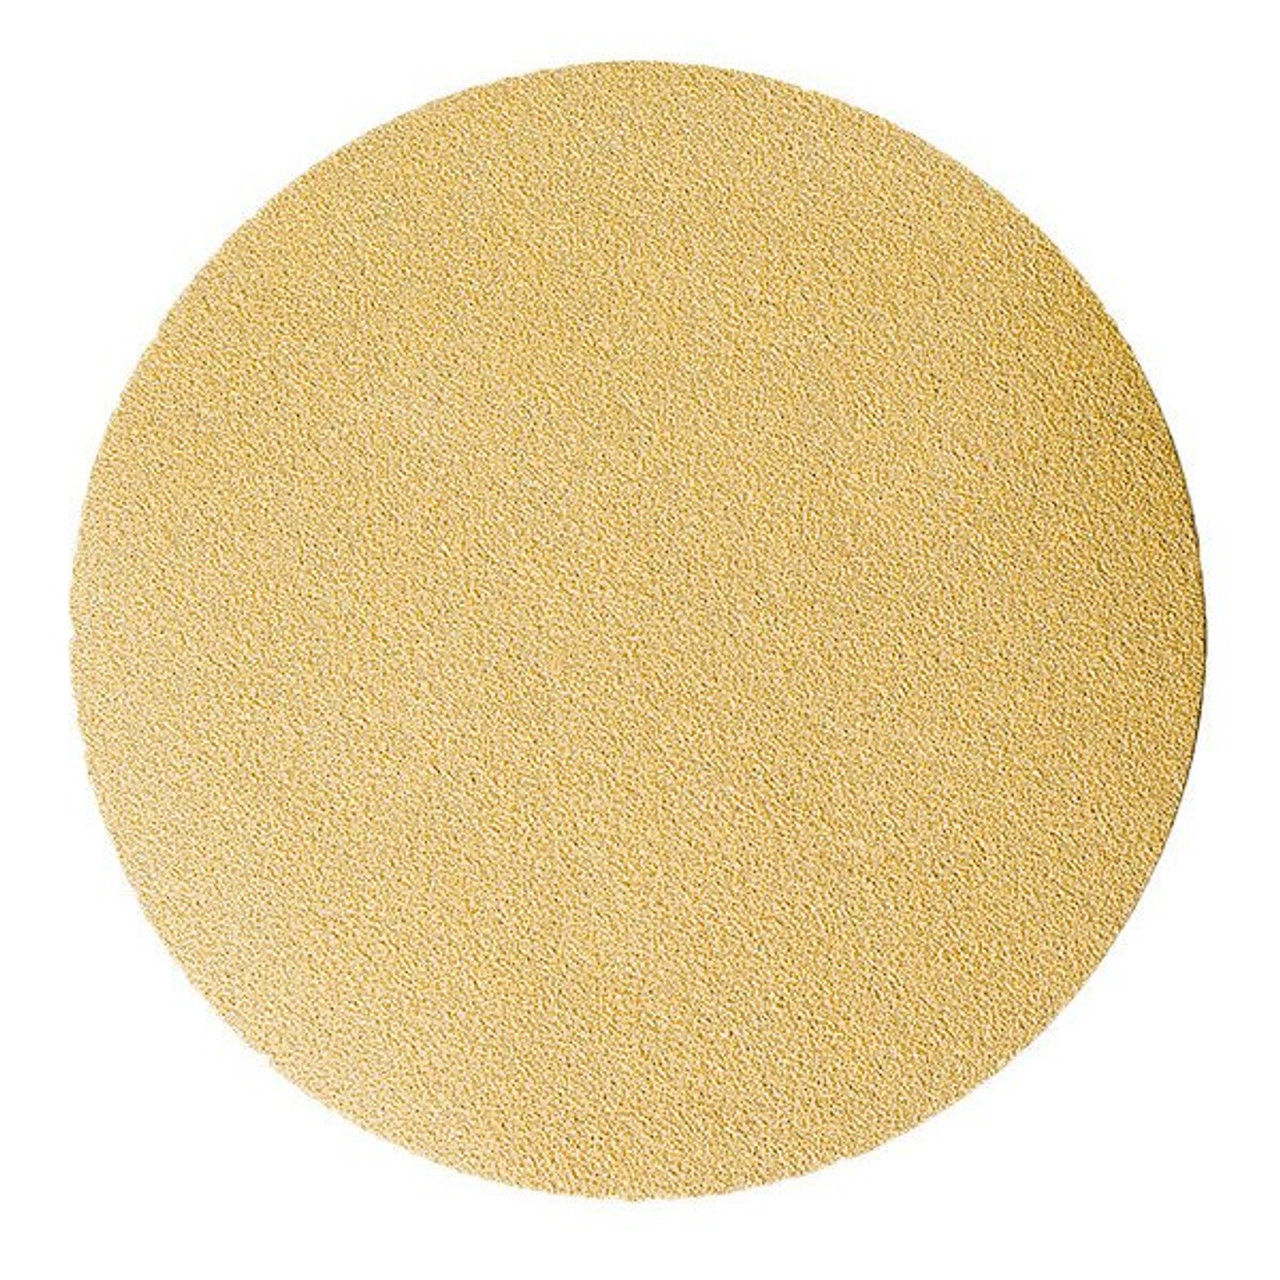 MIRKA (23-341-180) 6" Gold Sanding Pads P180 Grit, 1-Pack/5-Discs